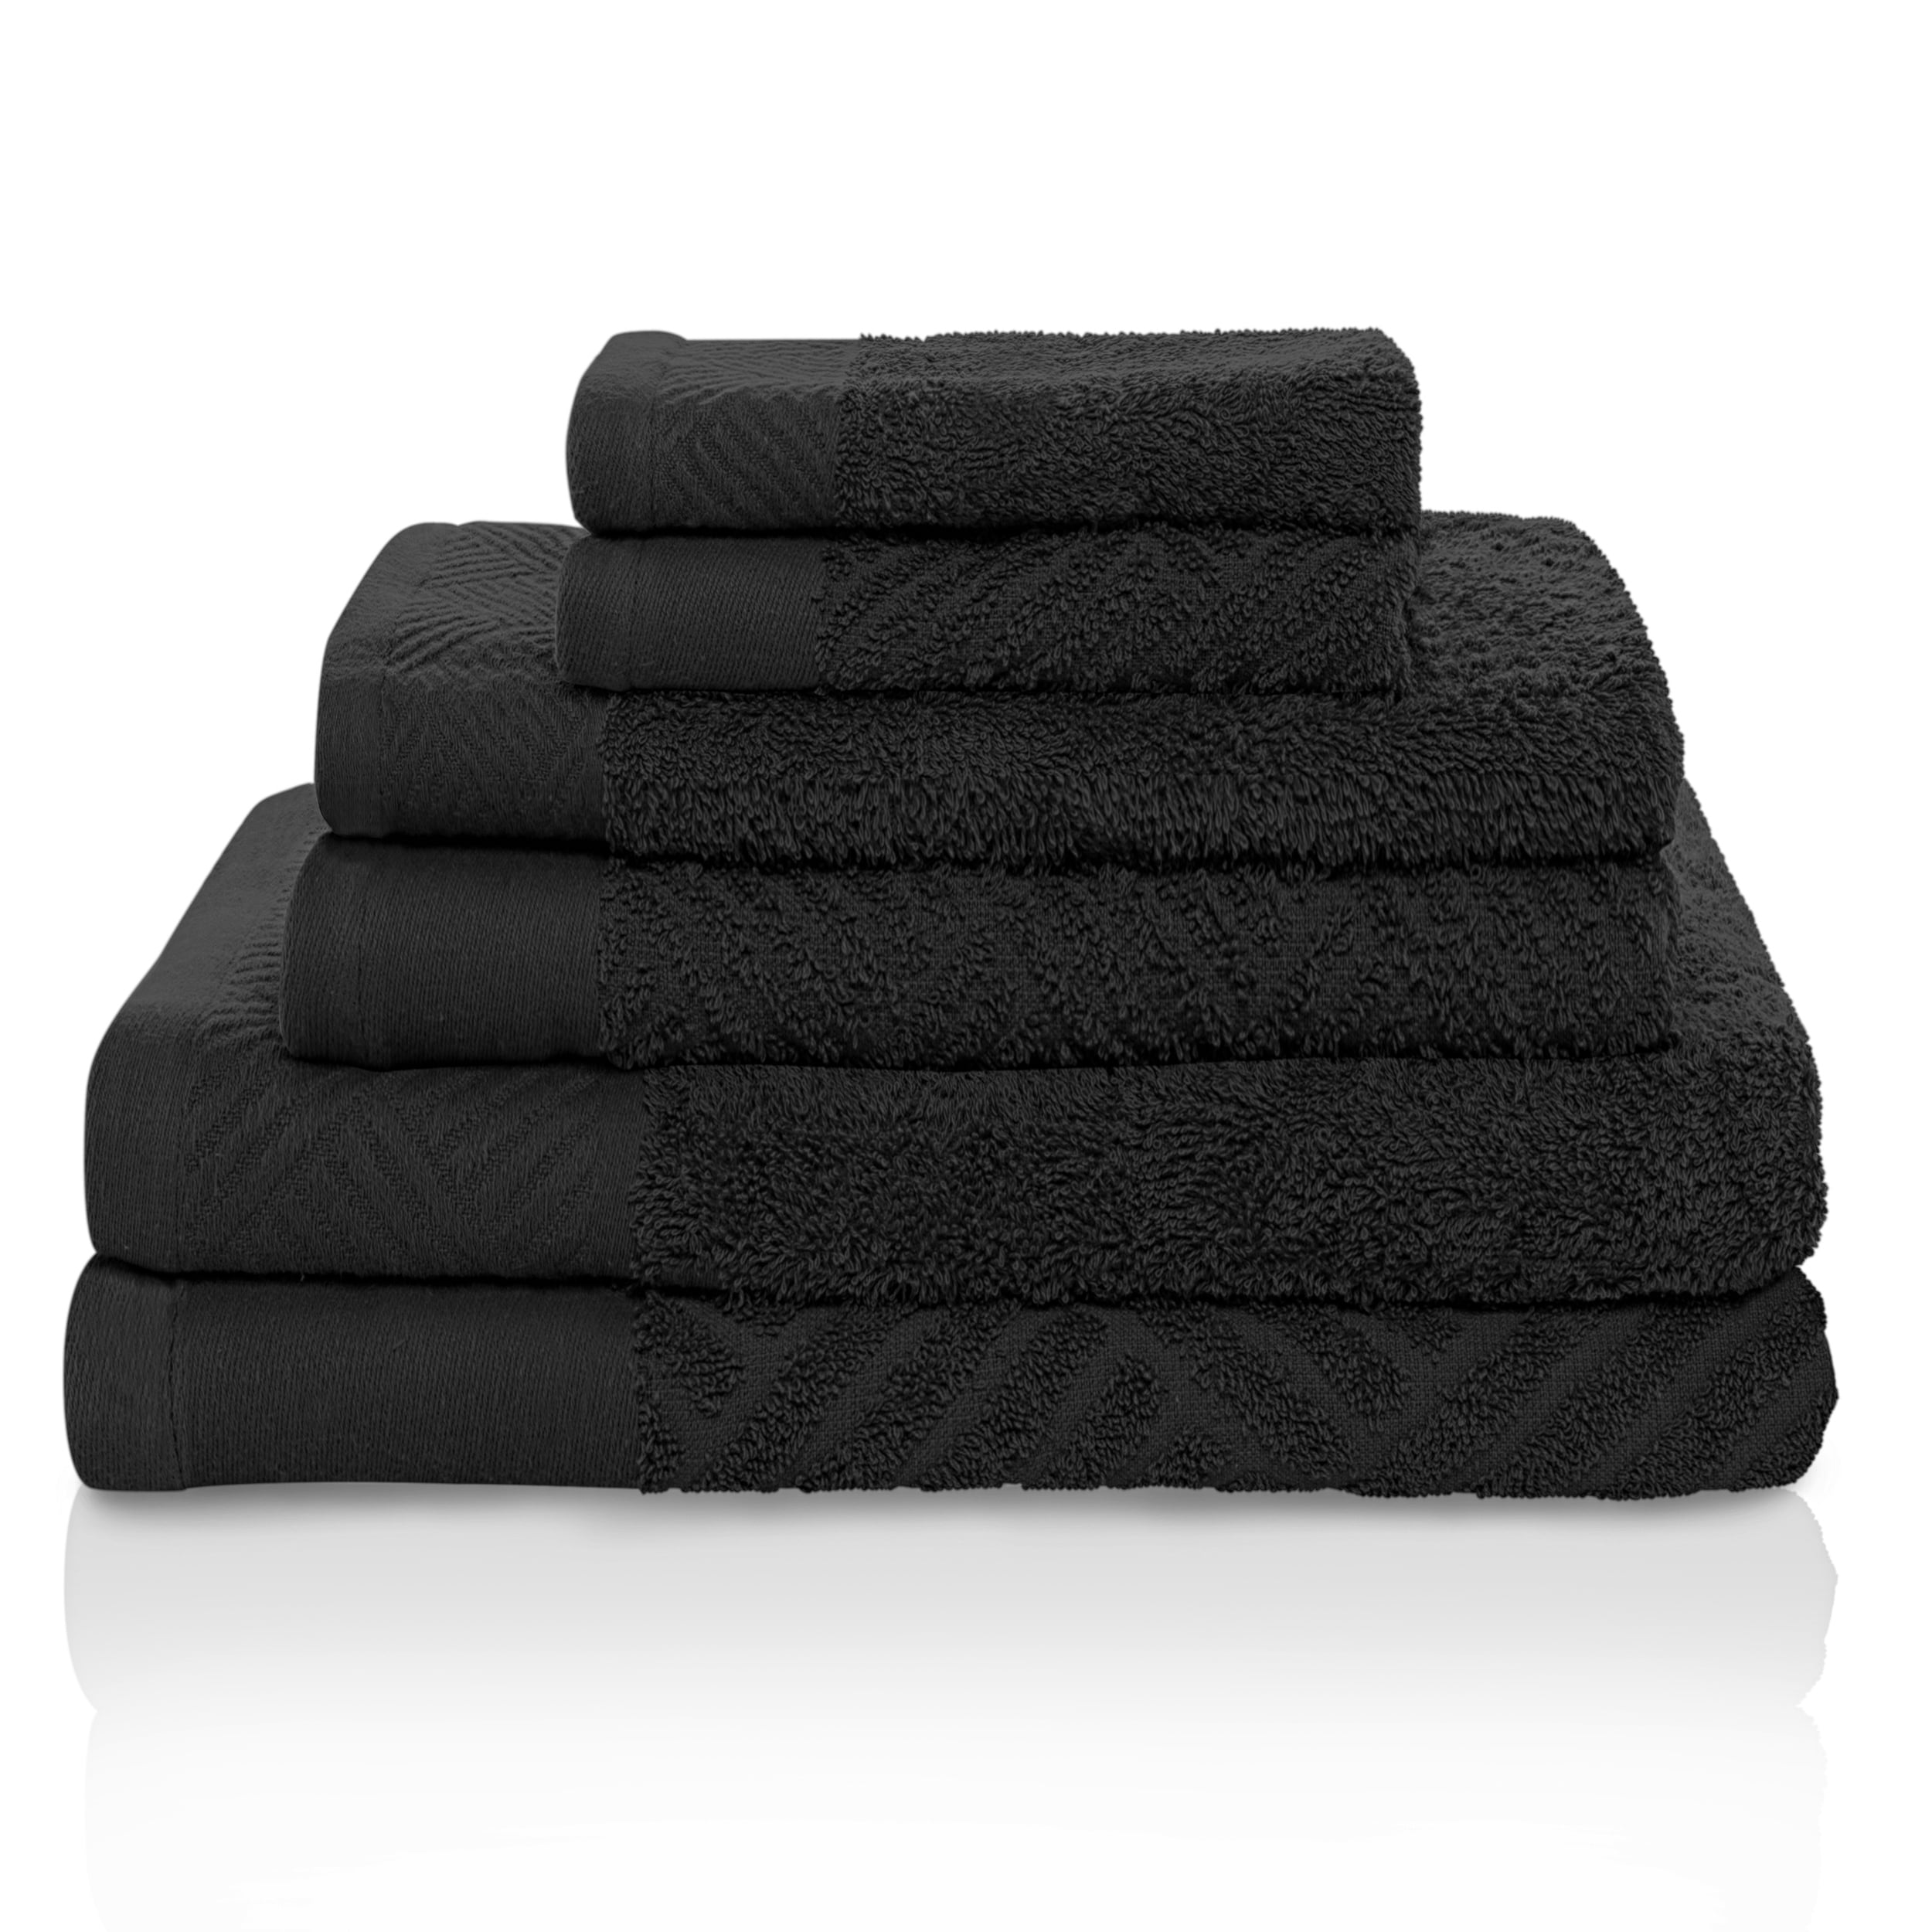 Zero Twist Cotton Waffle Honeycomb Medium Weight Face Towel Washcloth Set of 12, Forest Green - Blue Nile Mills